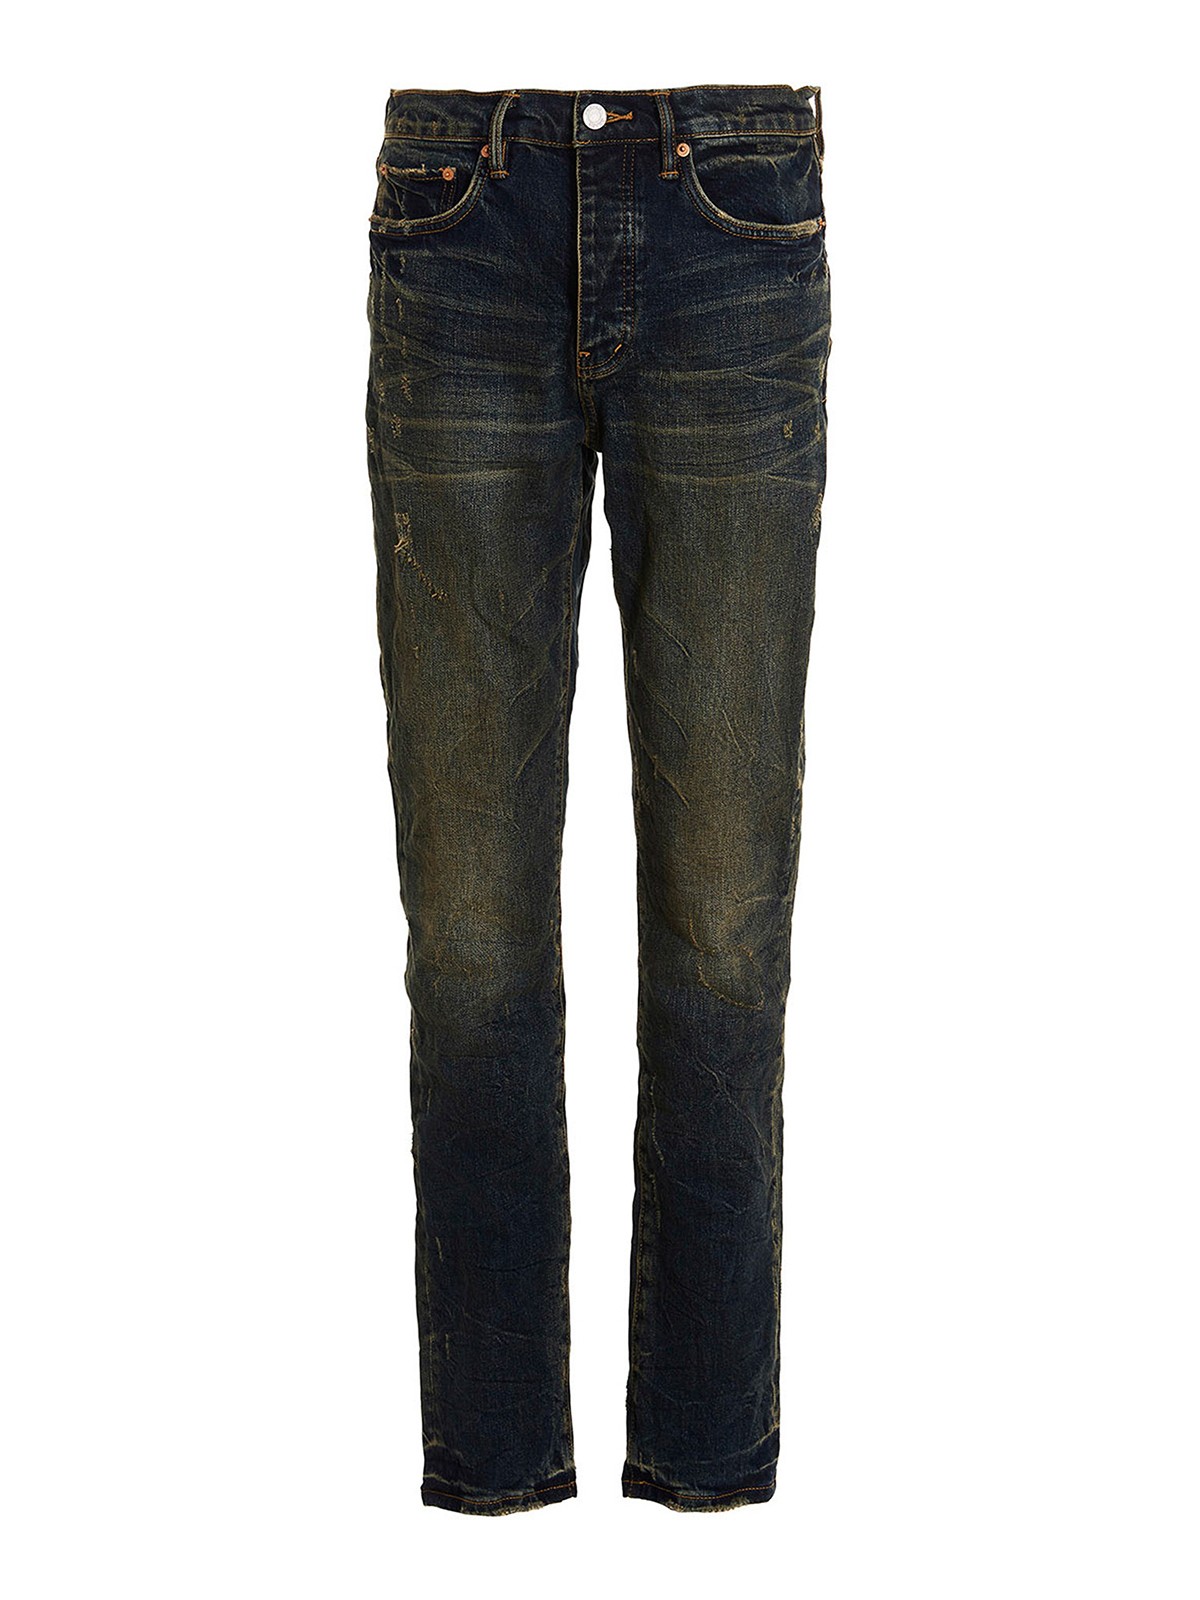 PURPLE BRAND - Cotton Denim Jeans